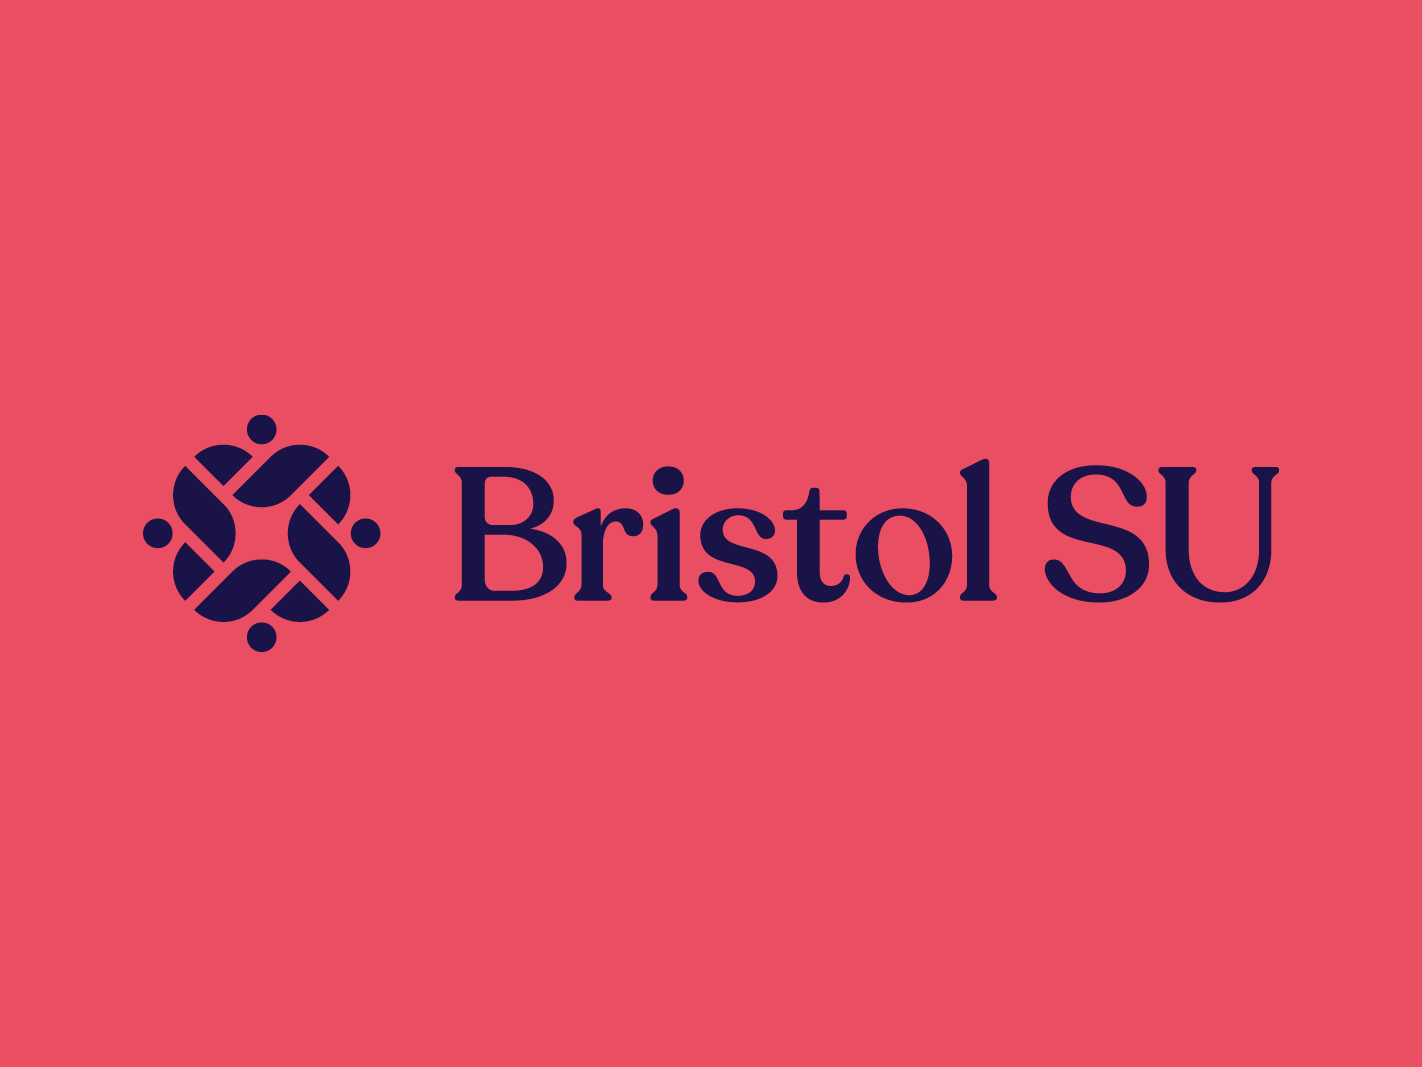 Bristol SU brand identity design